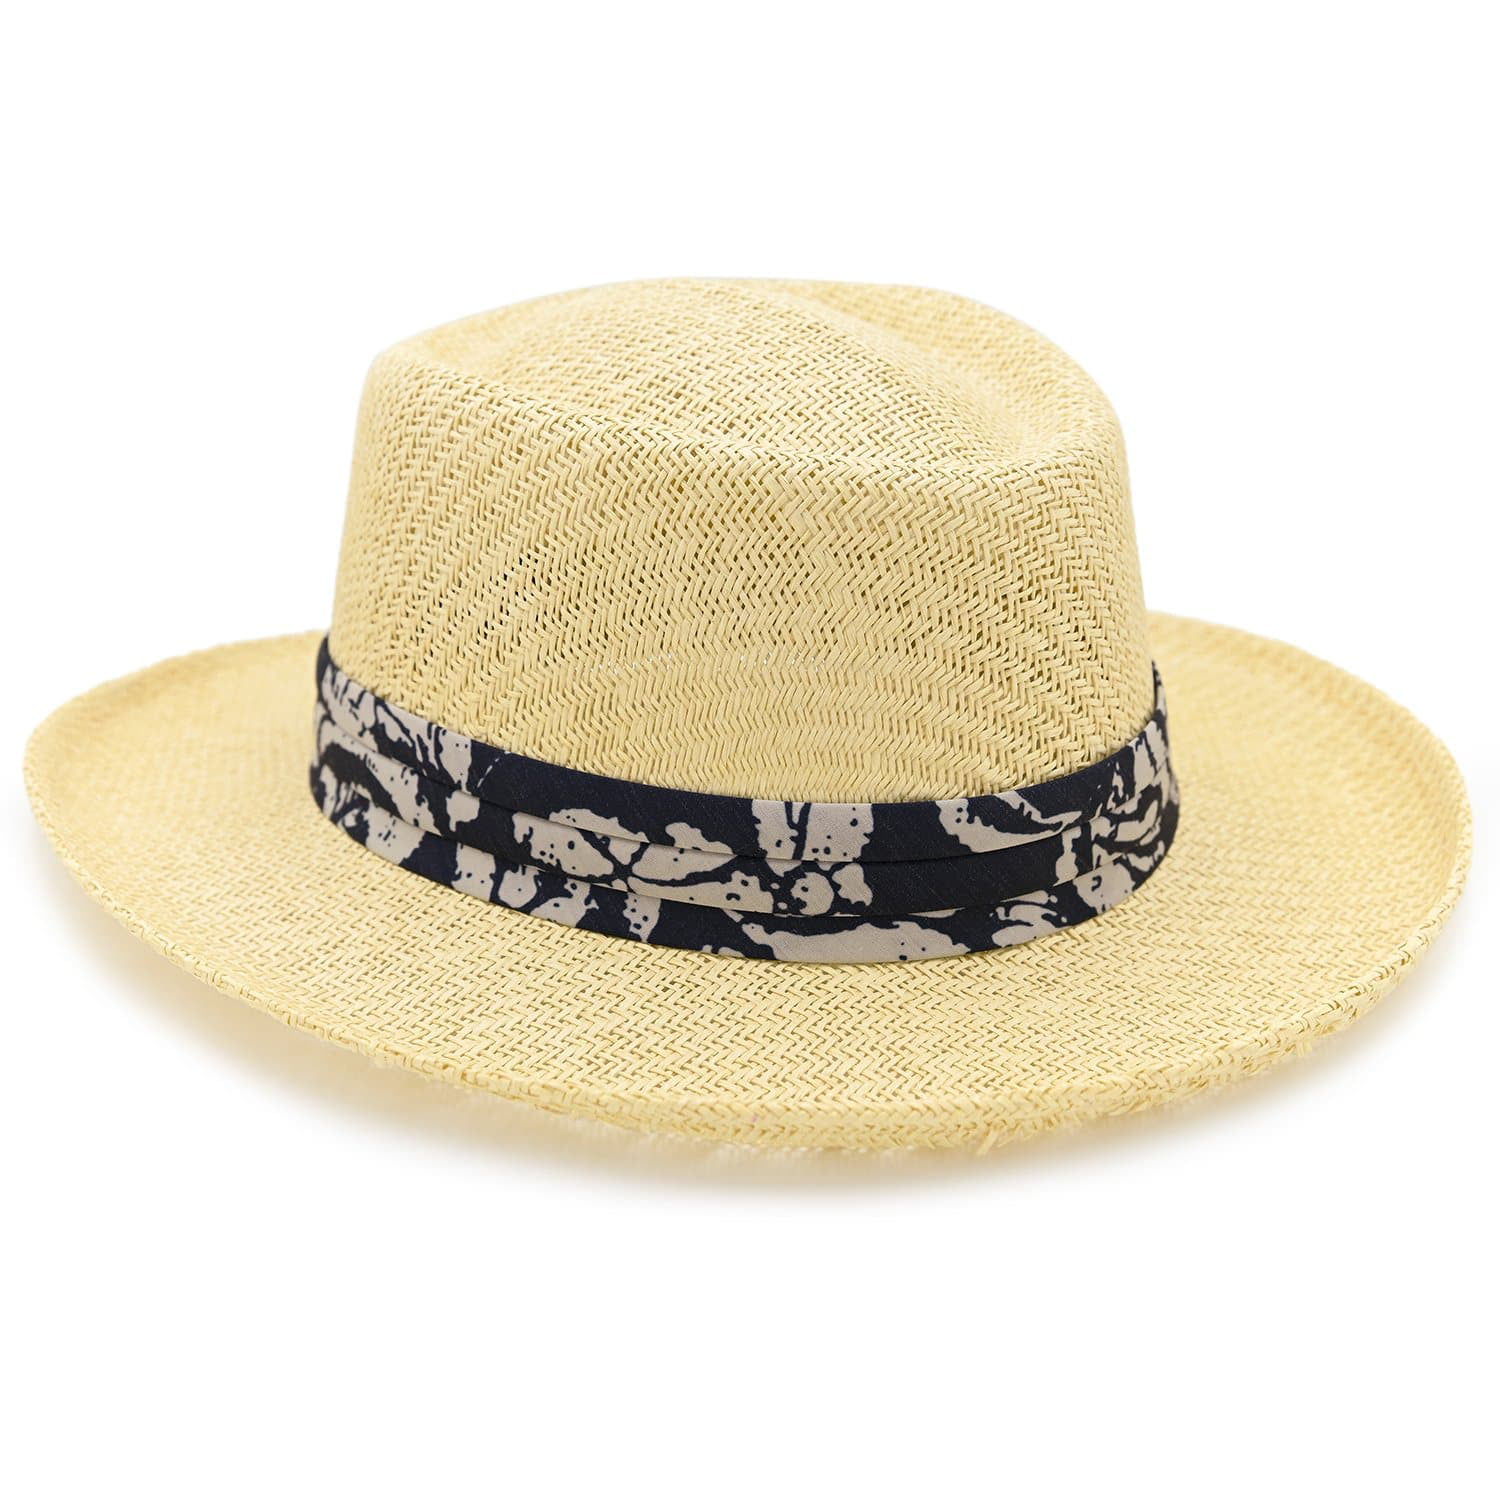 Panama Jack Gambler Straw Hat - Lightweight, 3 Big Brim, Inner Elastic  Sweatband, 3-Pleat Ribbon Hat Band (Black, Large/X-Large)